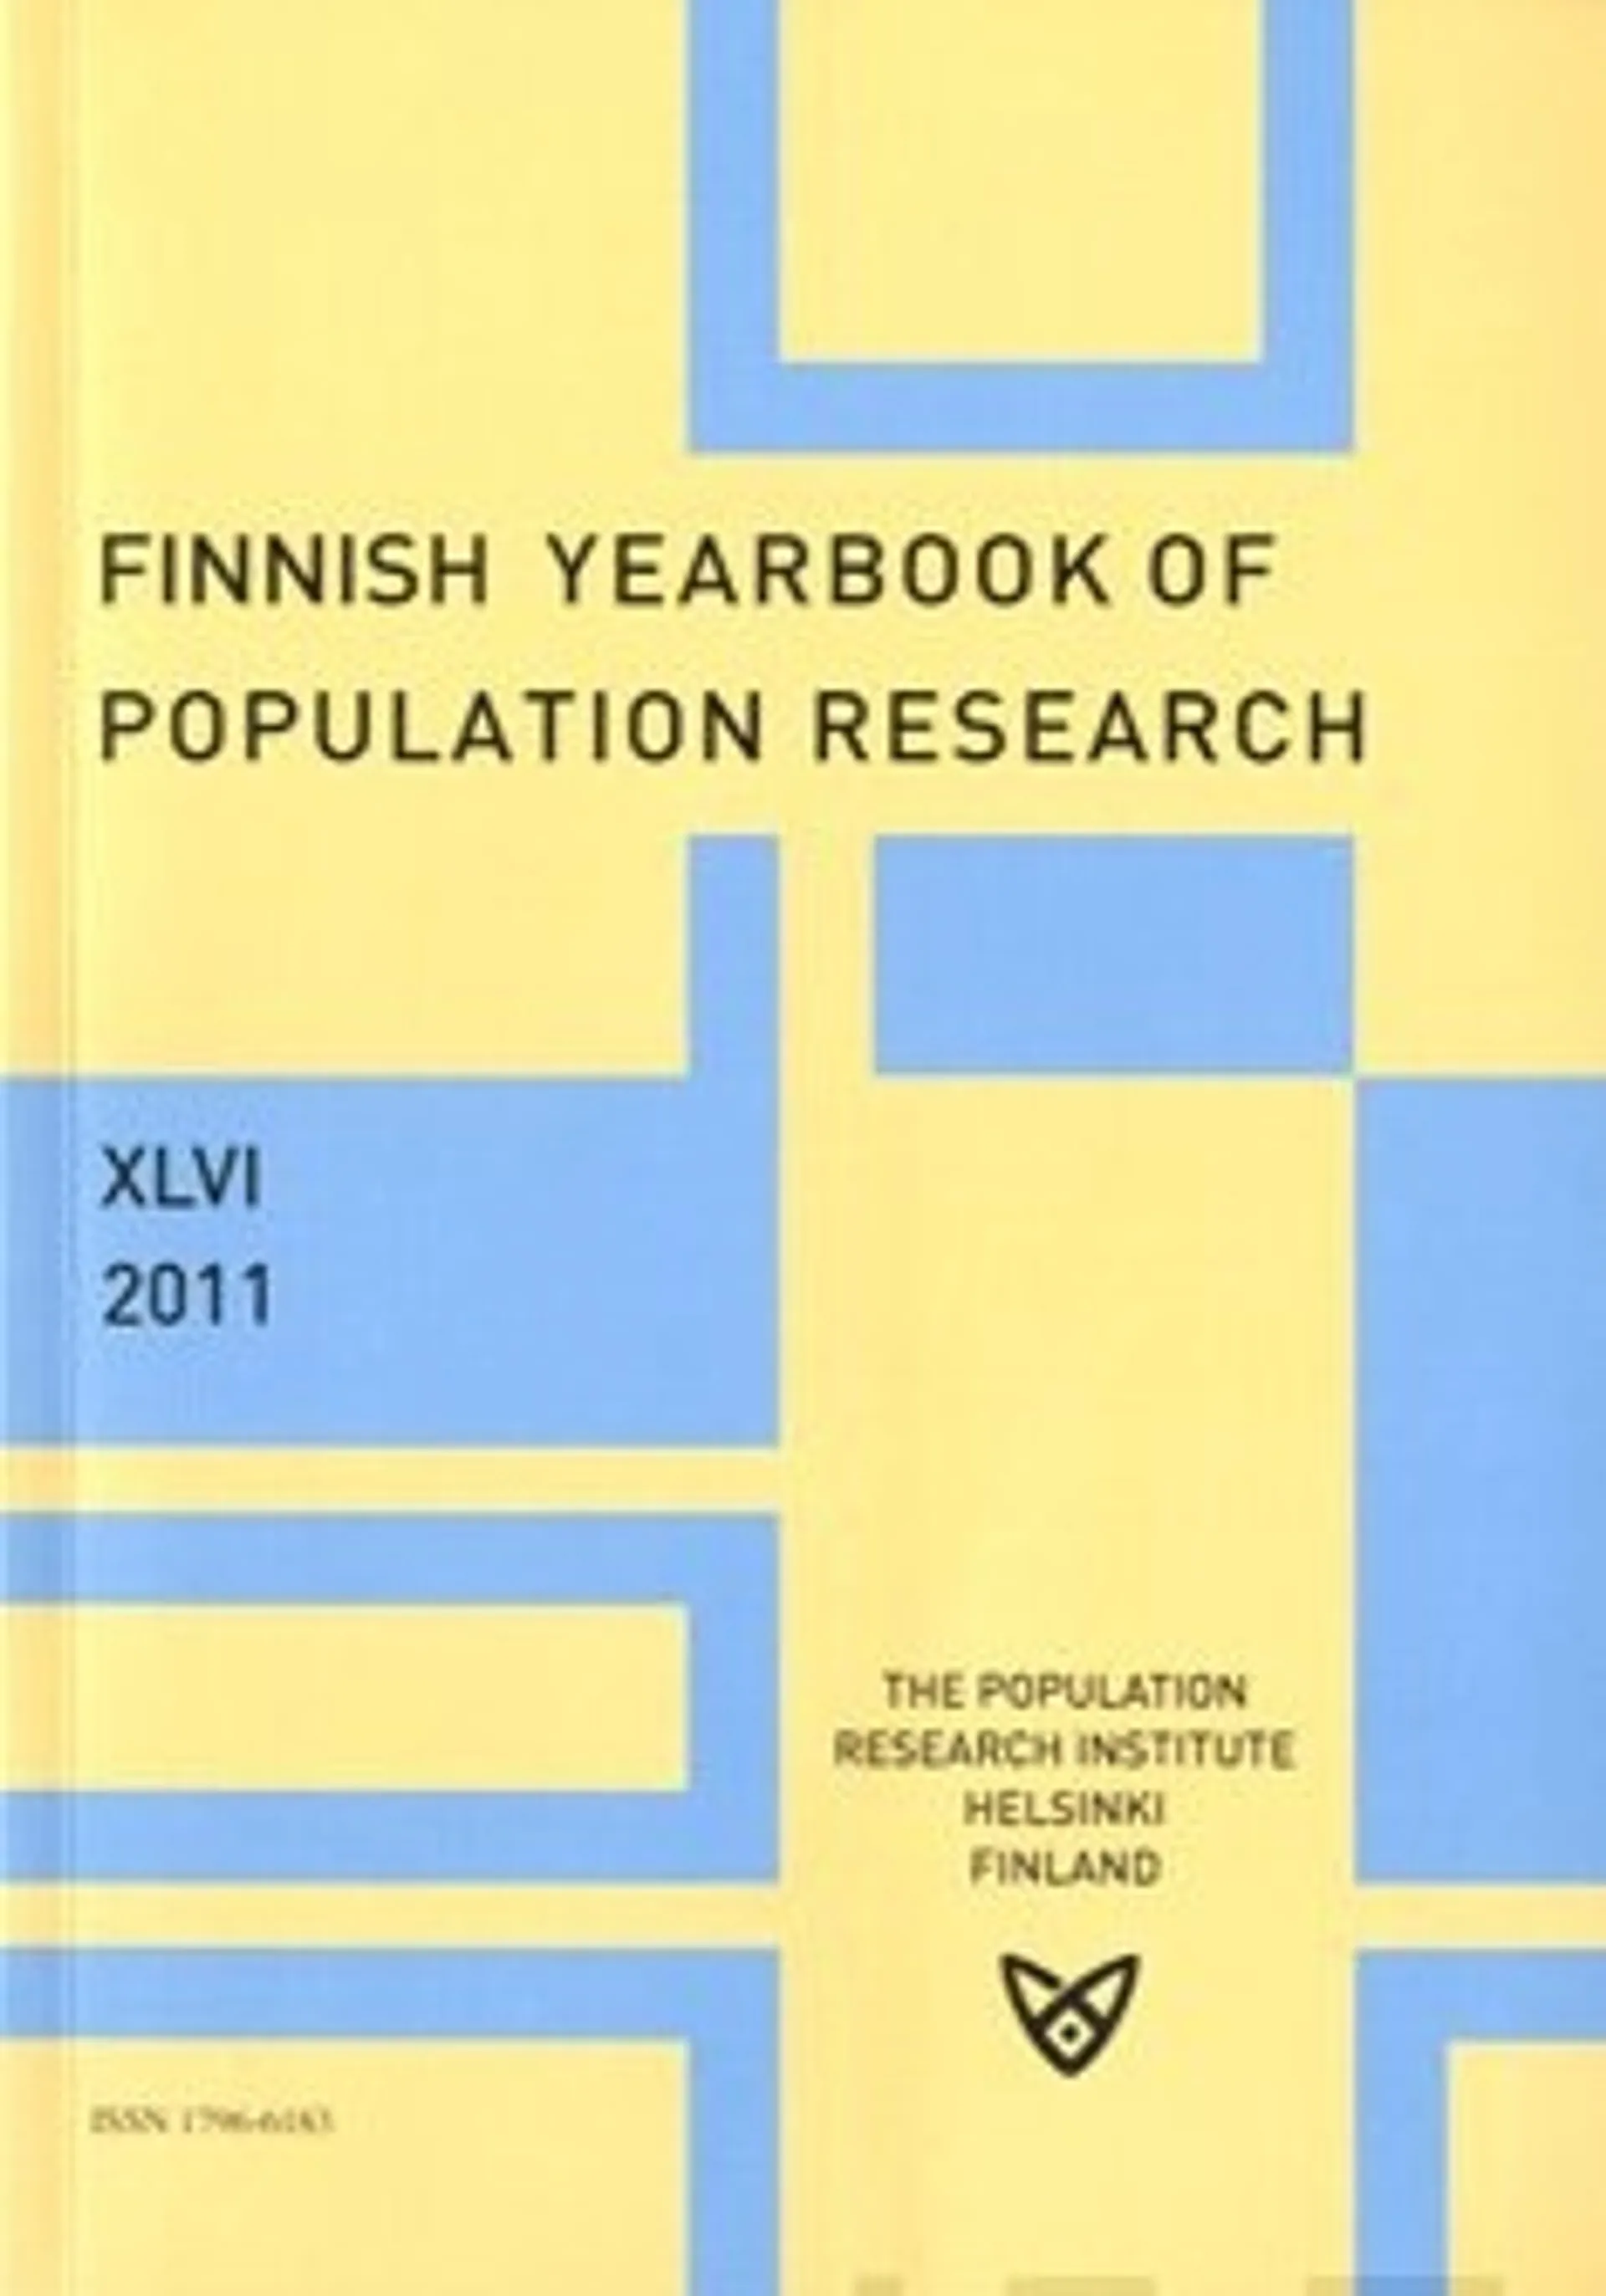 Finnish yearbook of population research XLVI 2011